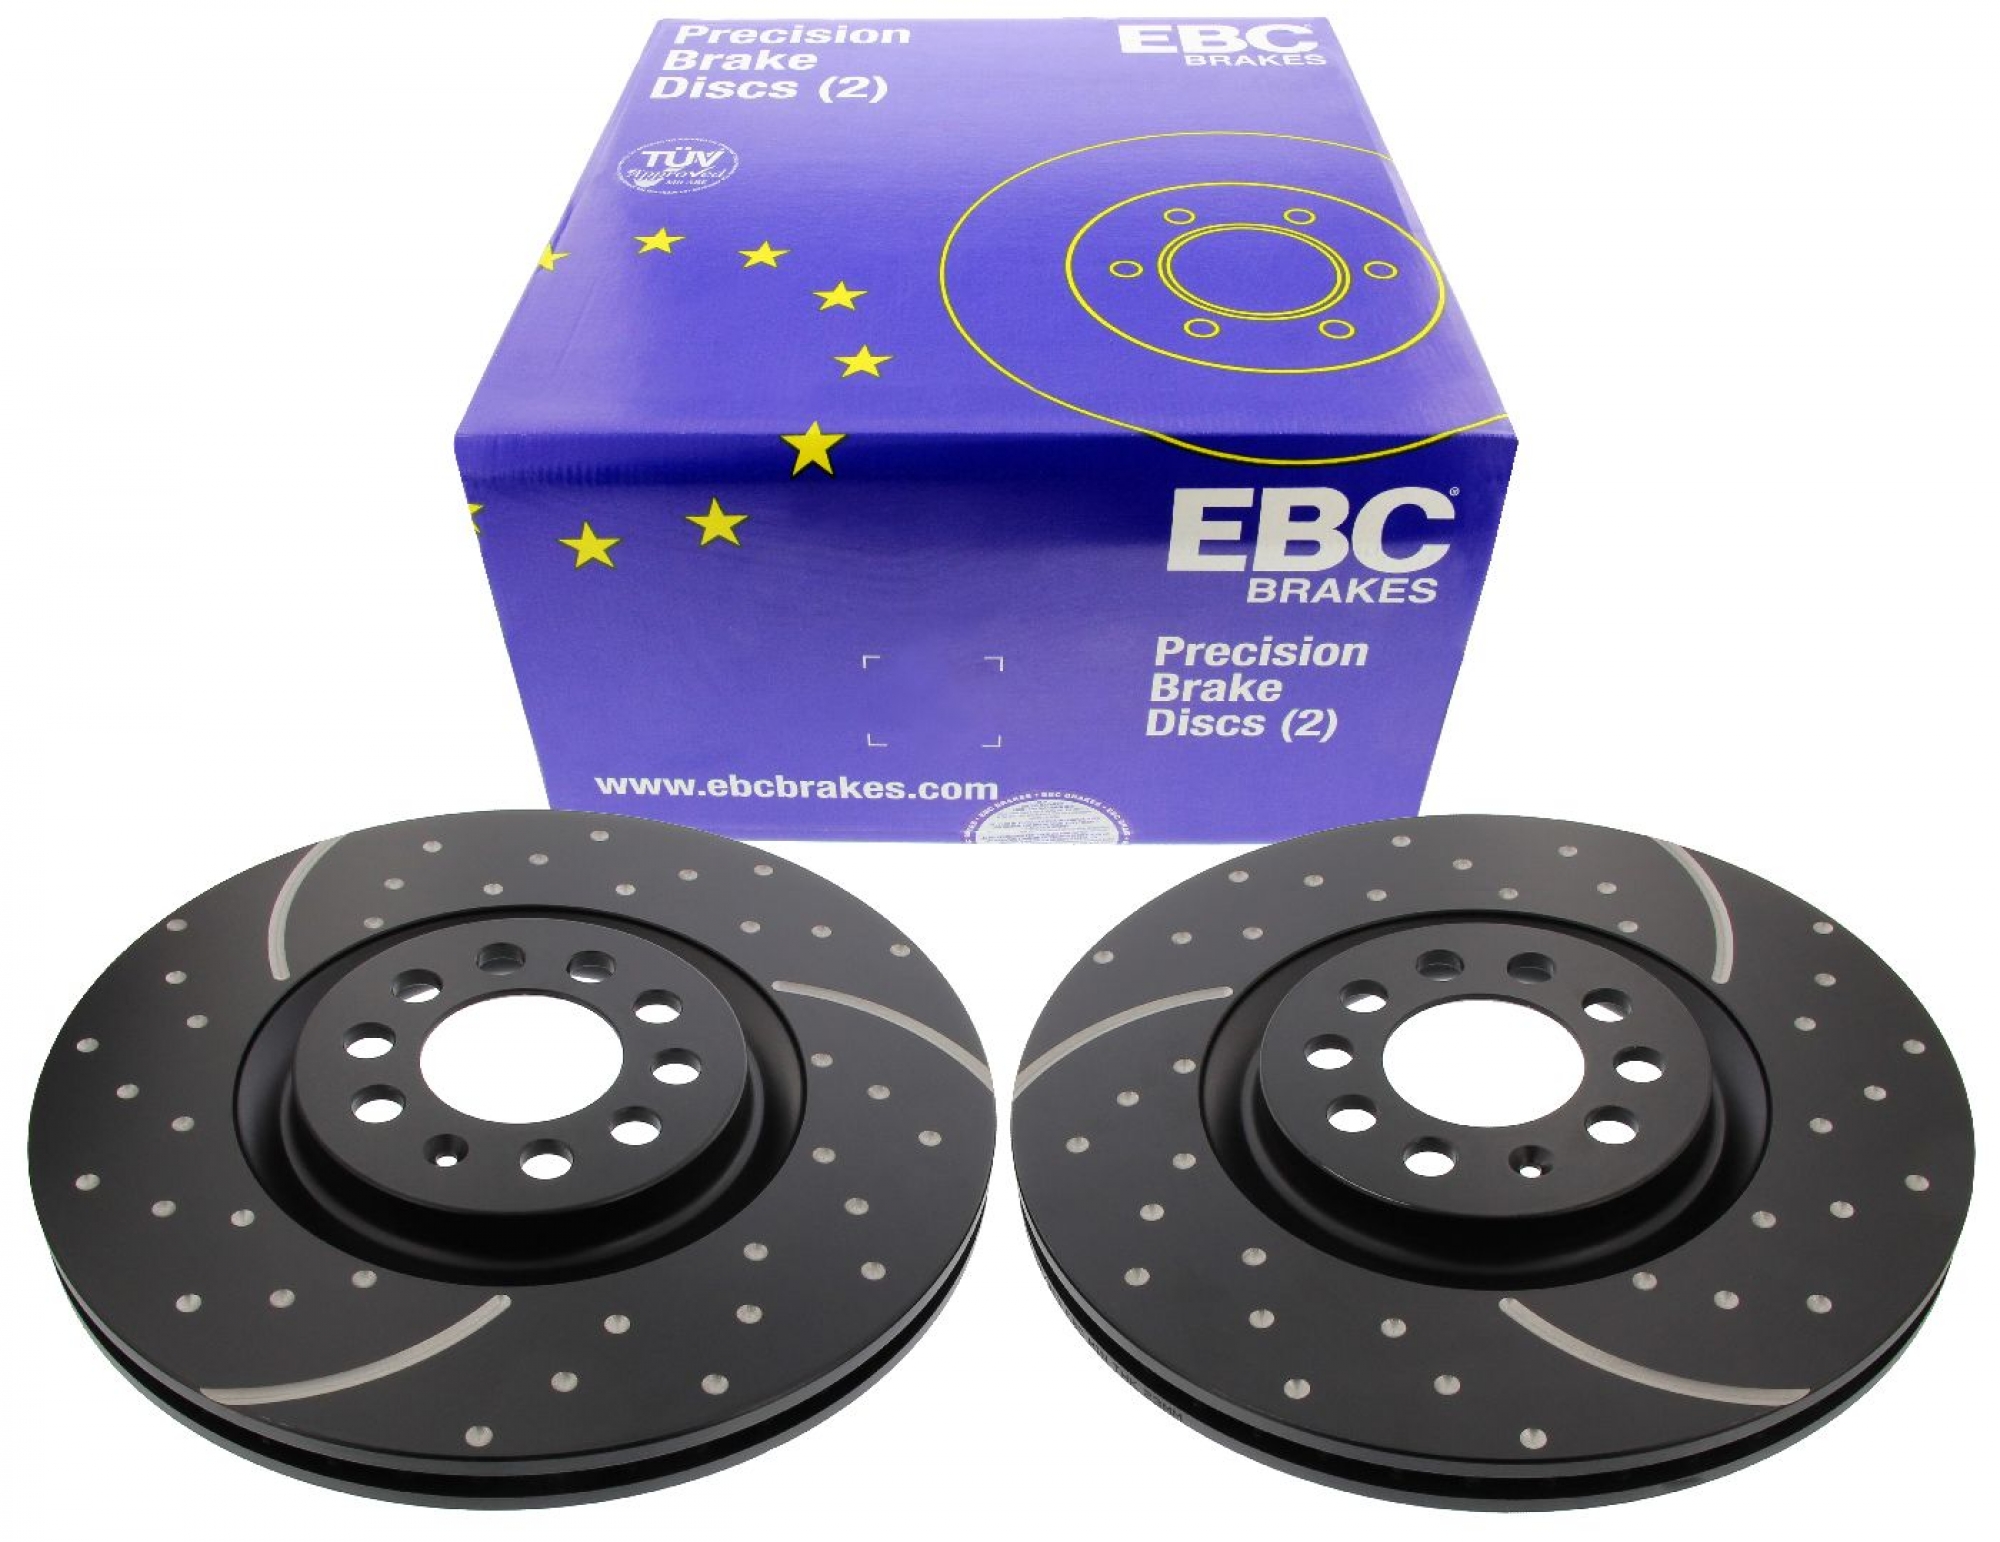 EBC-Bremsscheiben, Turbo Groove Disc Black (2-teilig), VA, VW Golf 4 Jubi, Ø 312 mm